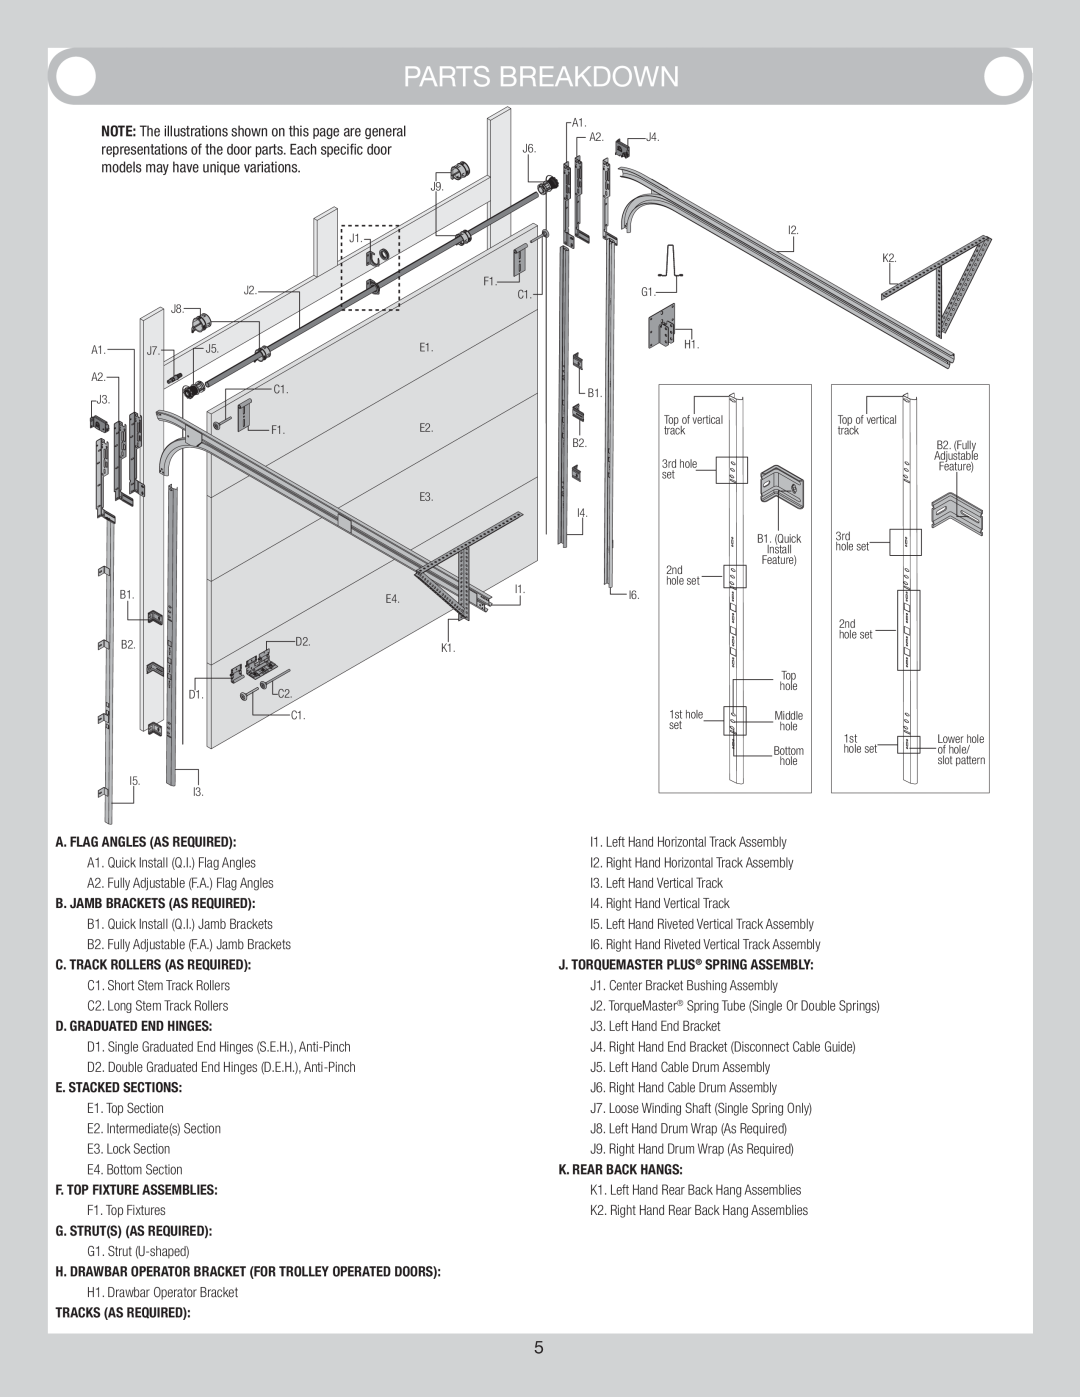 Wayne-Dalton 9800 installation instructions Parts Breakdown 